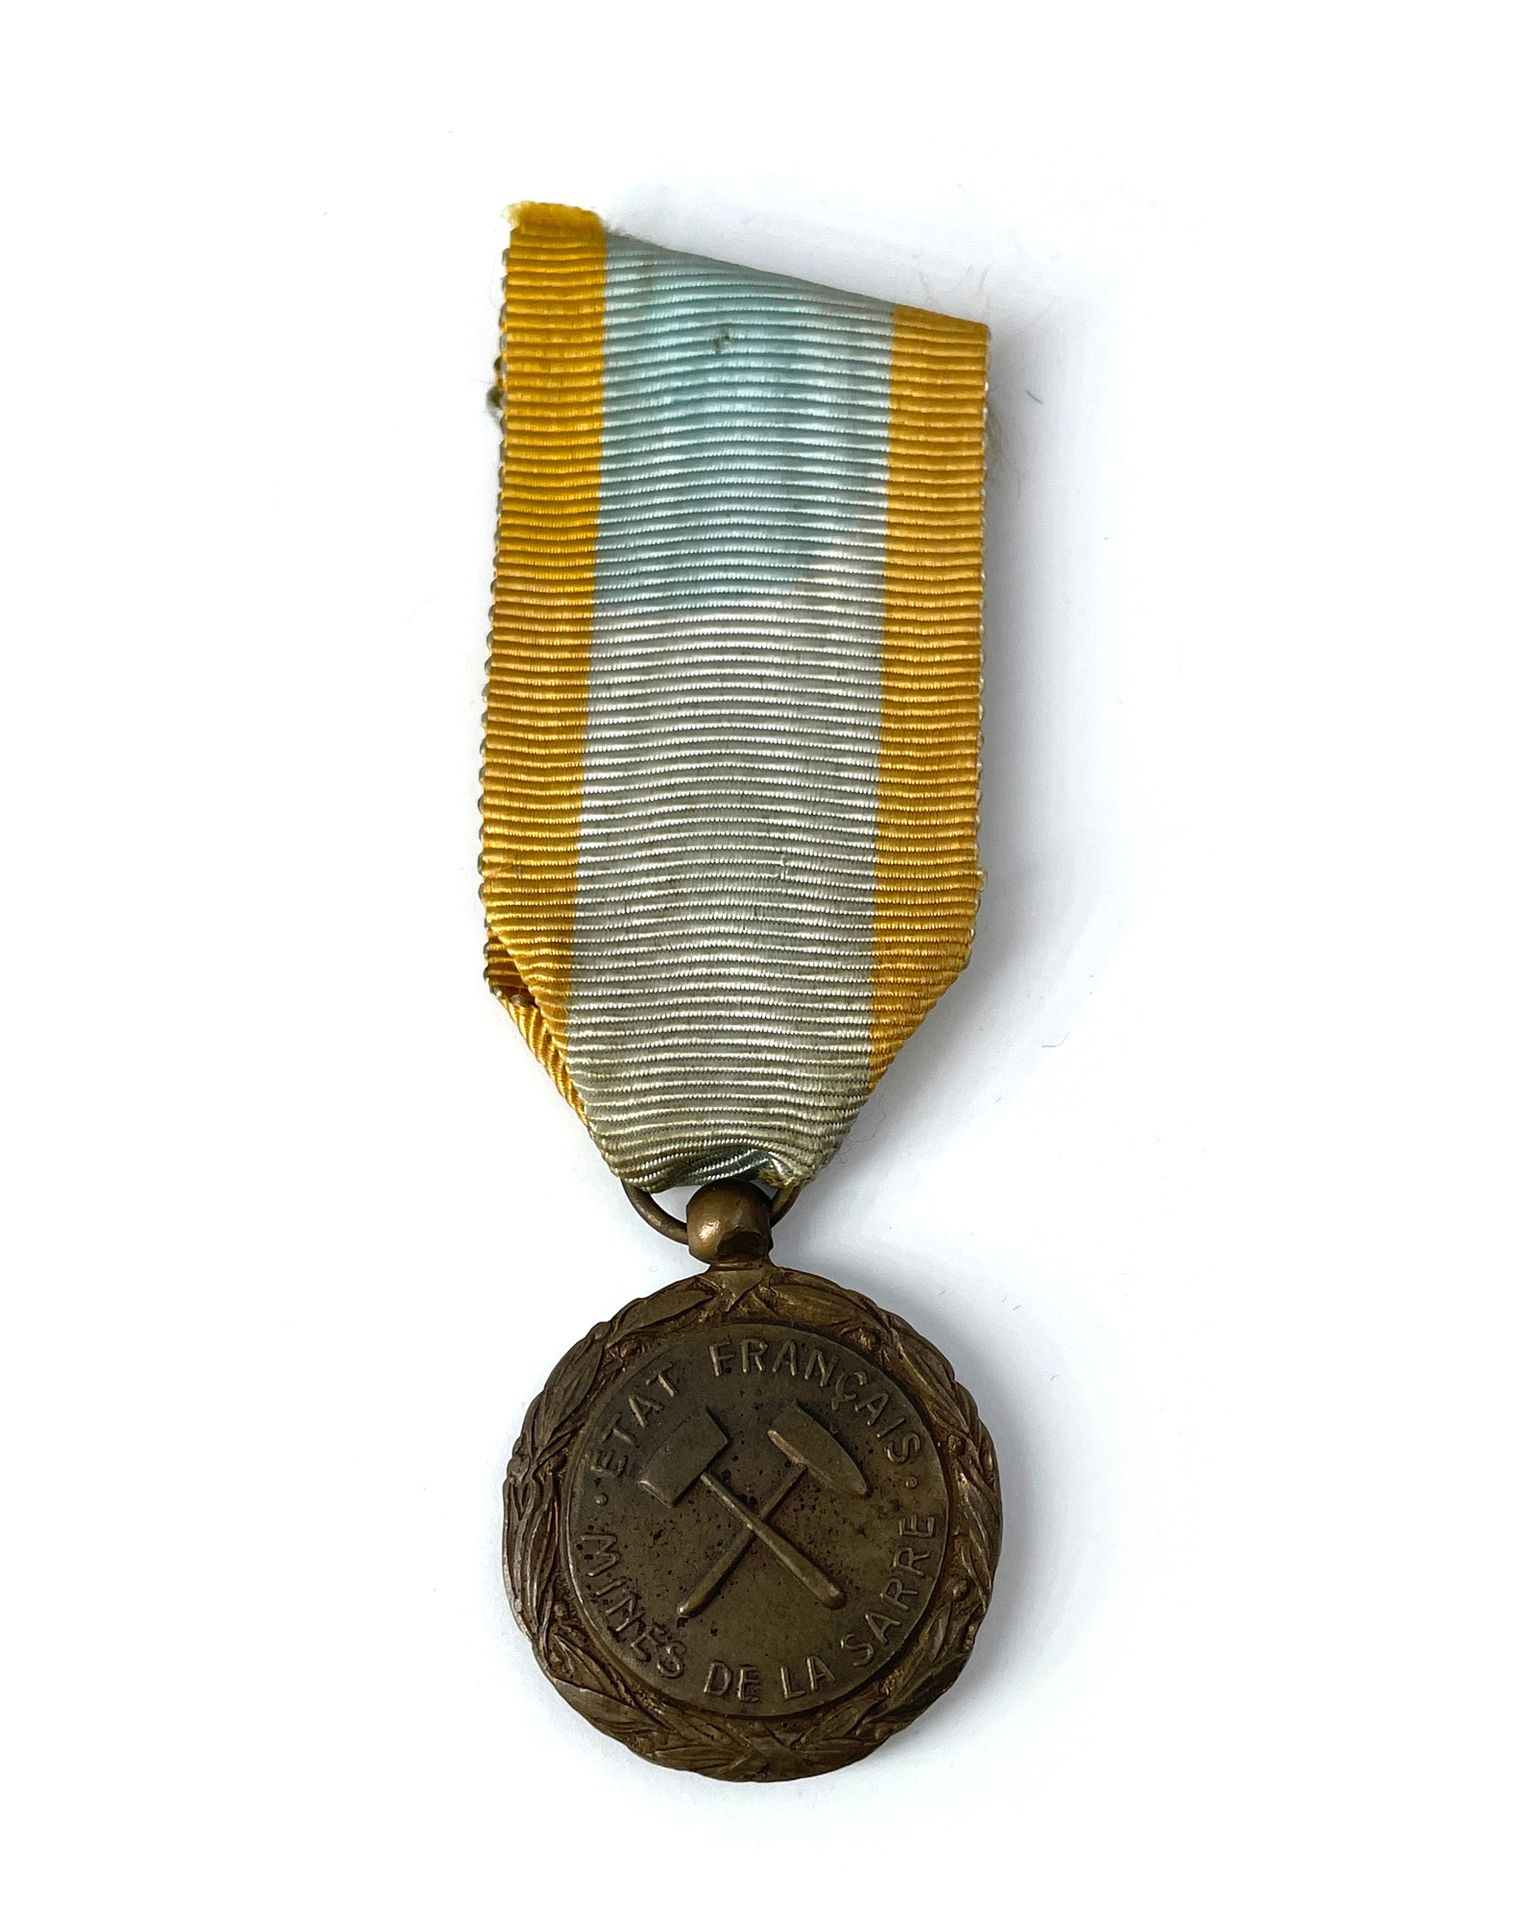 Null 法国萨尔州矿业奖章。
铜质。丝带。
30 mm。